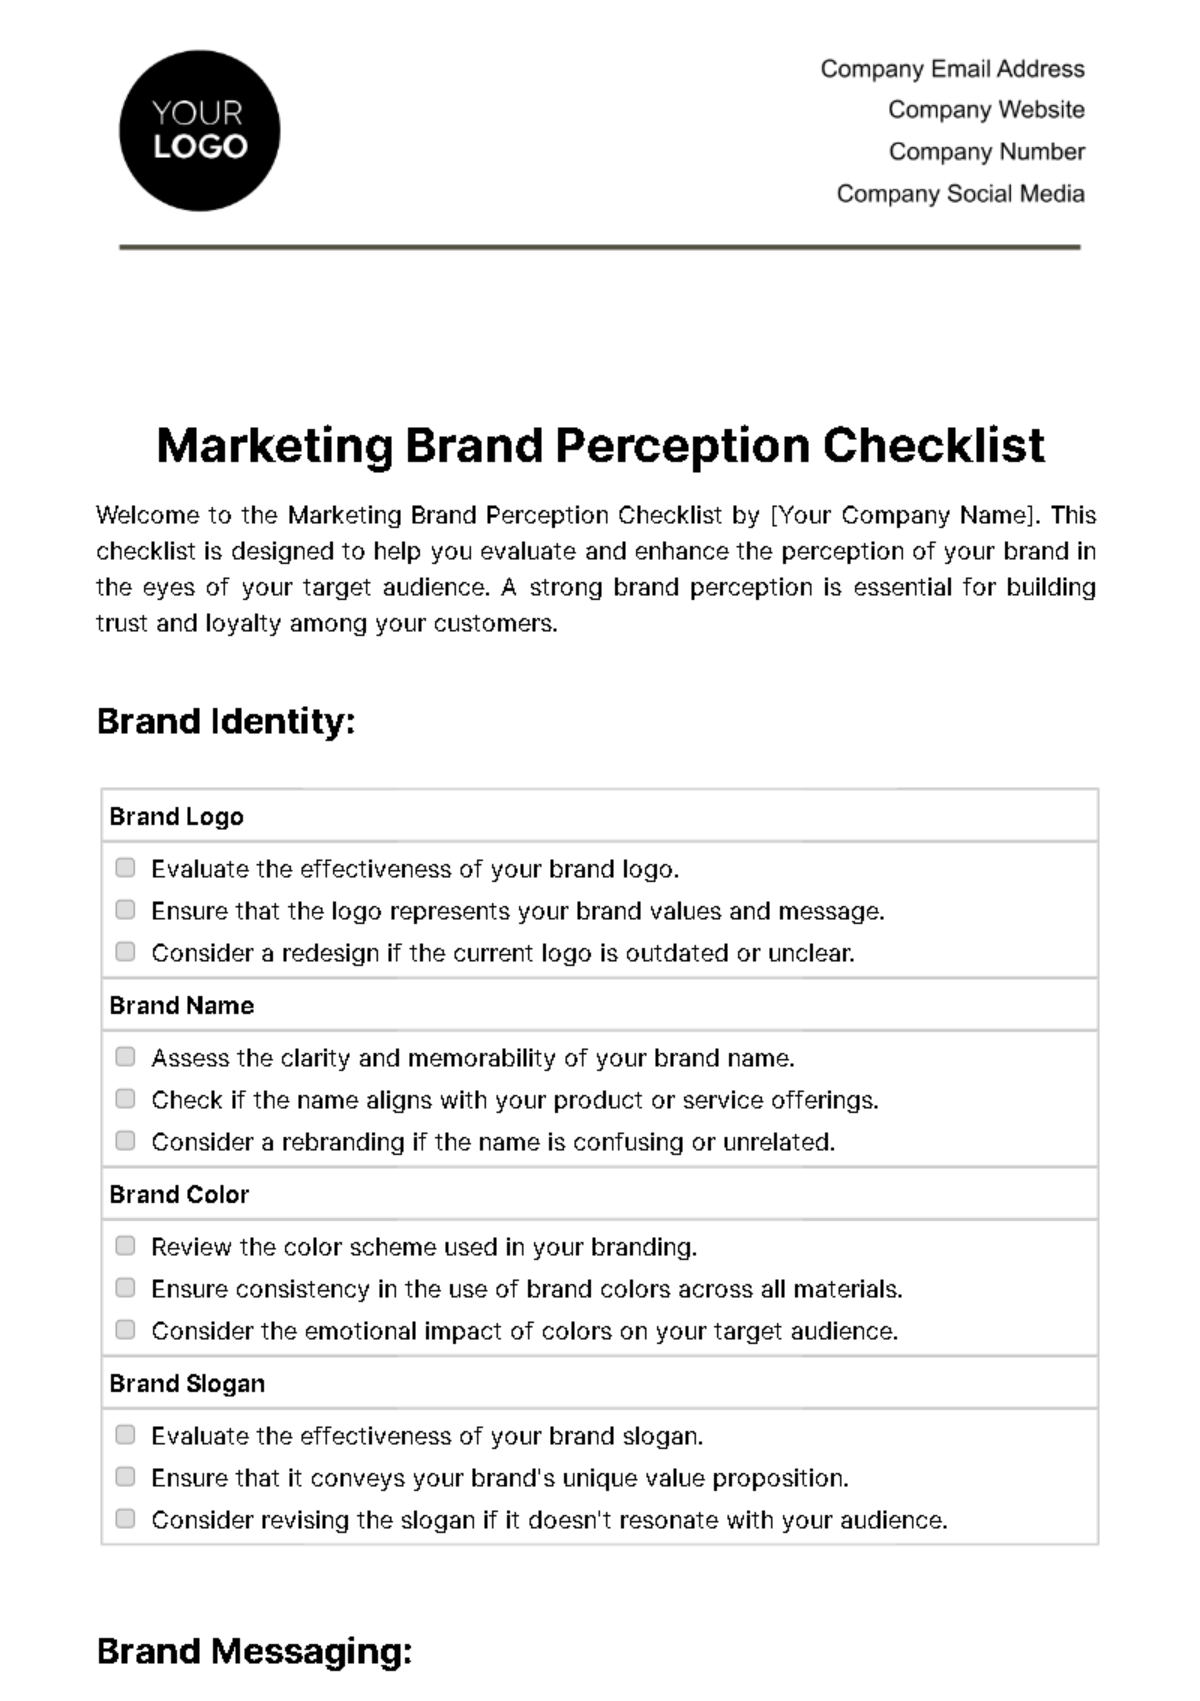 Free Marketing Brand Perception Checklist Template